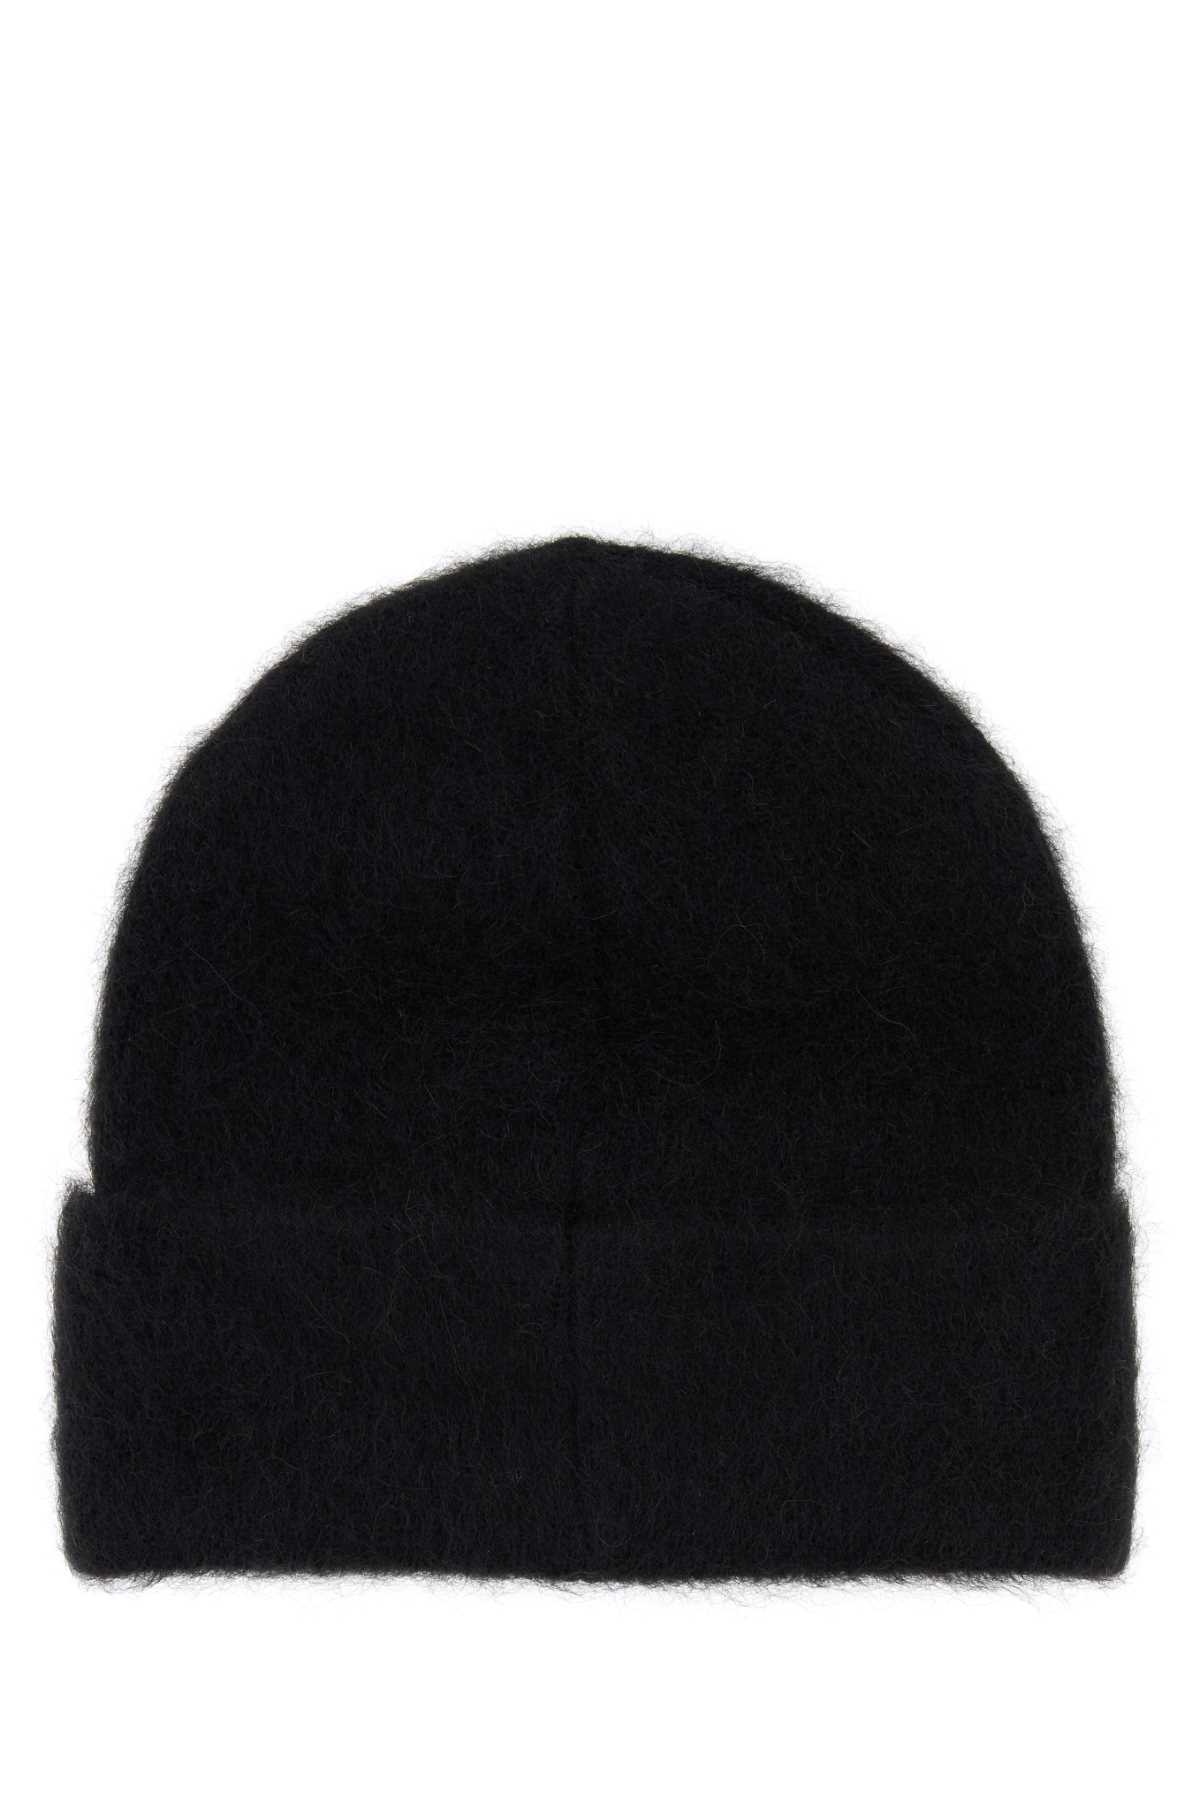 By Far Black Alpaca Beanie Hat